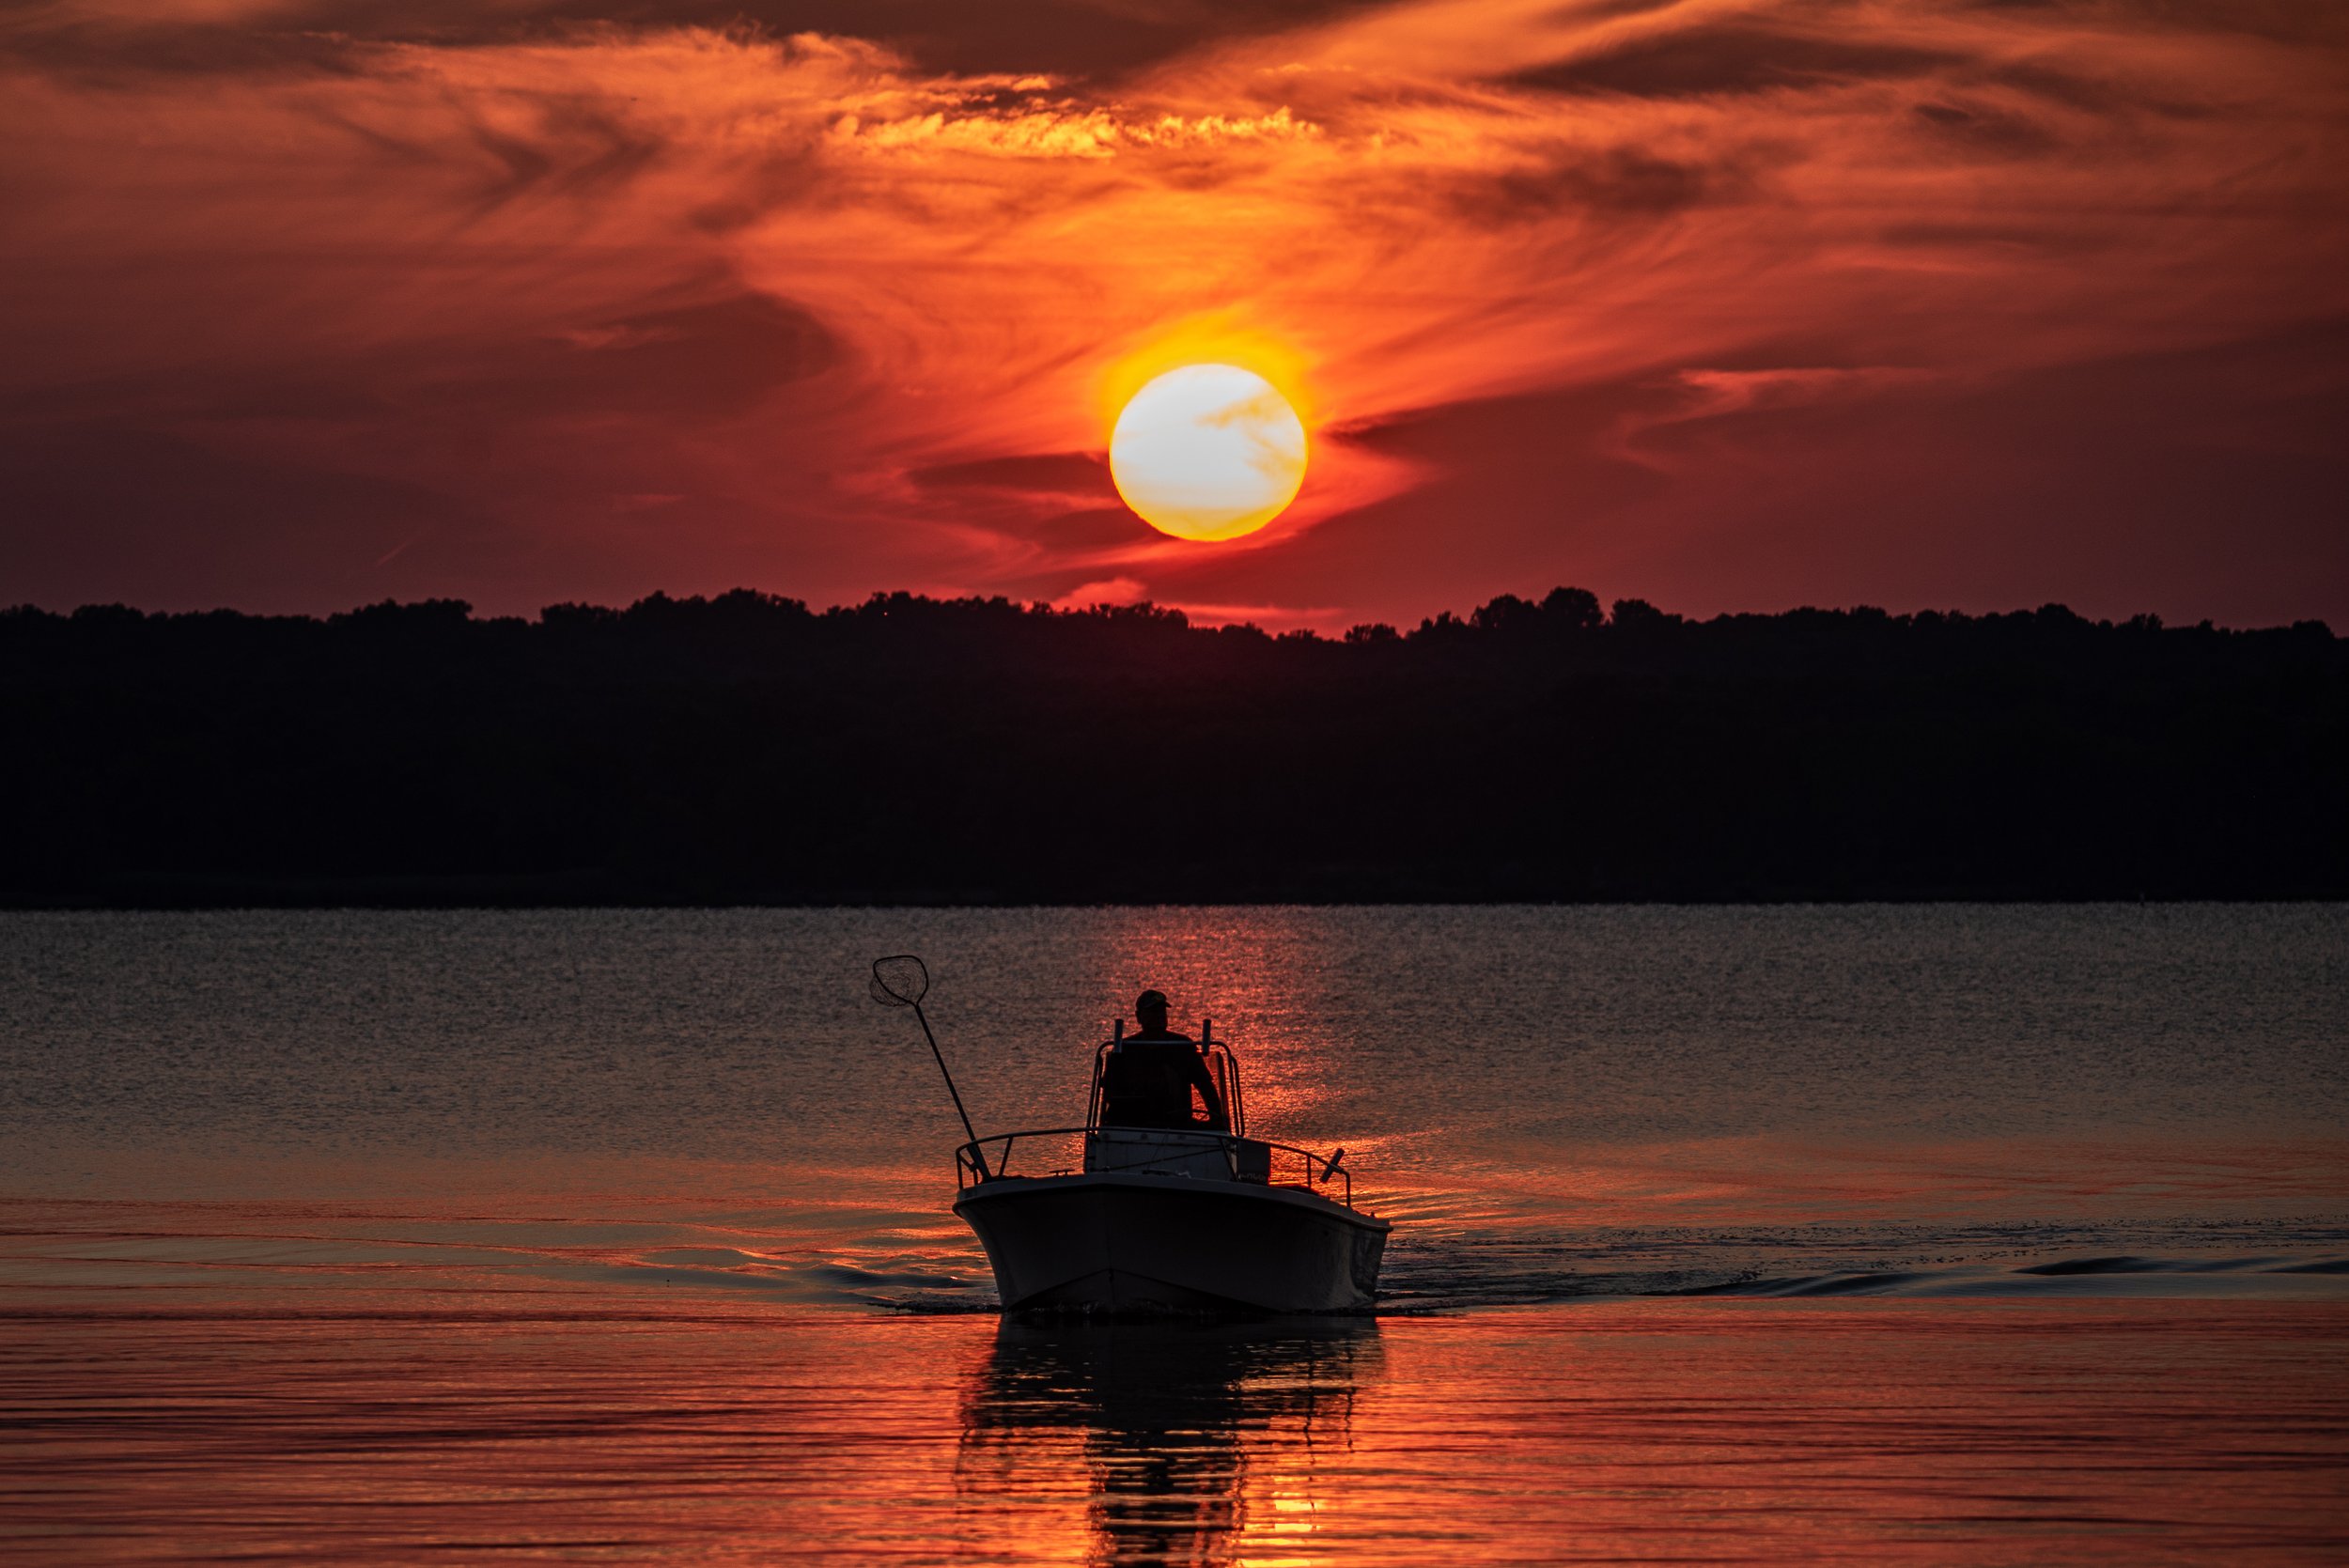 Sunset Crabbing Silhouette.jpg